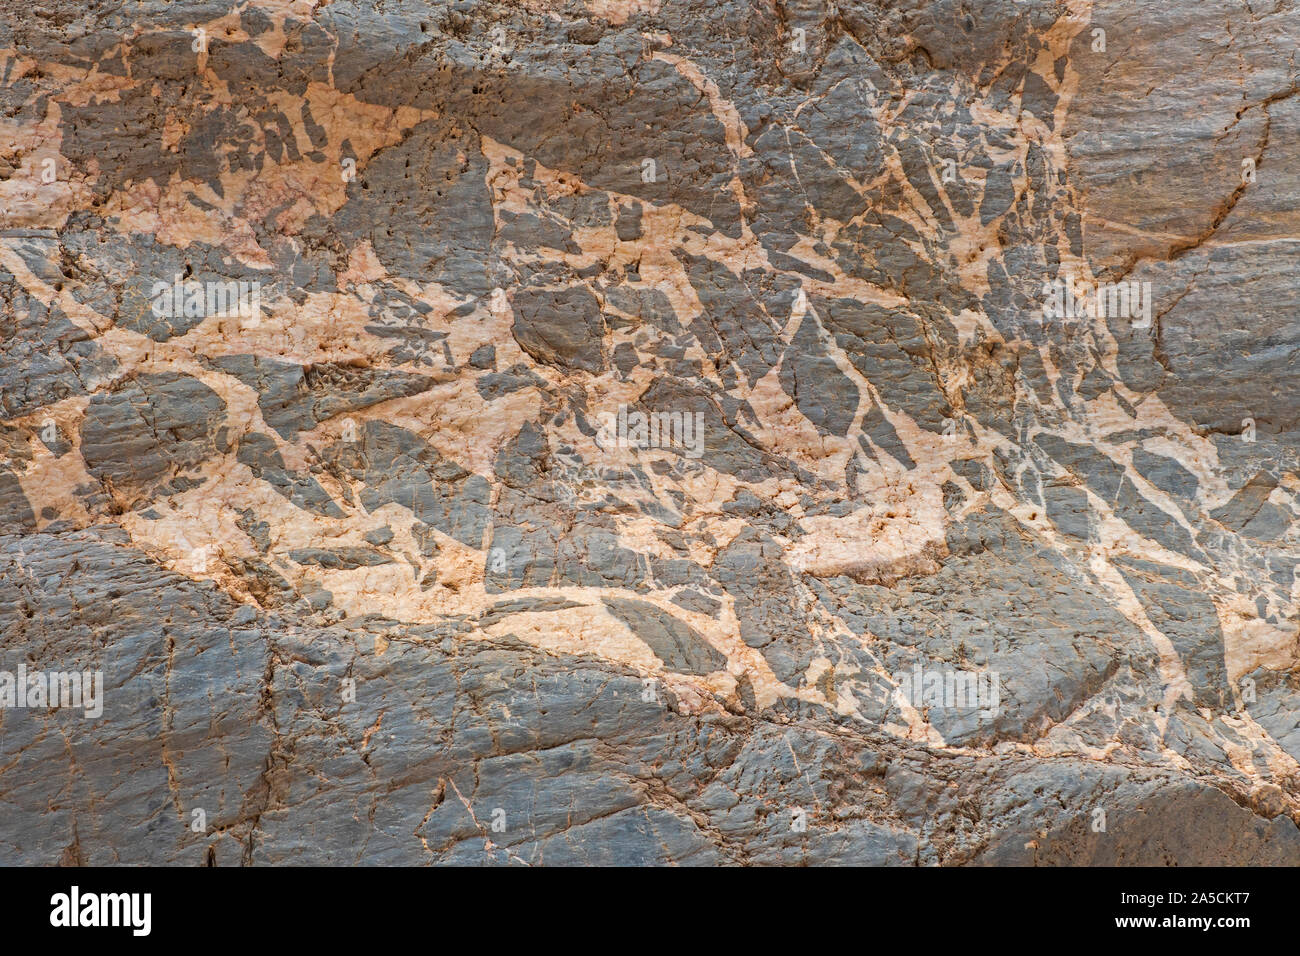 Megabreccia in einem Canyon Wand in den Titus Canyon im Death Valley National Park in Kalifornien Stockfoto